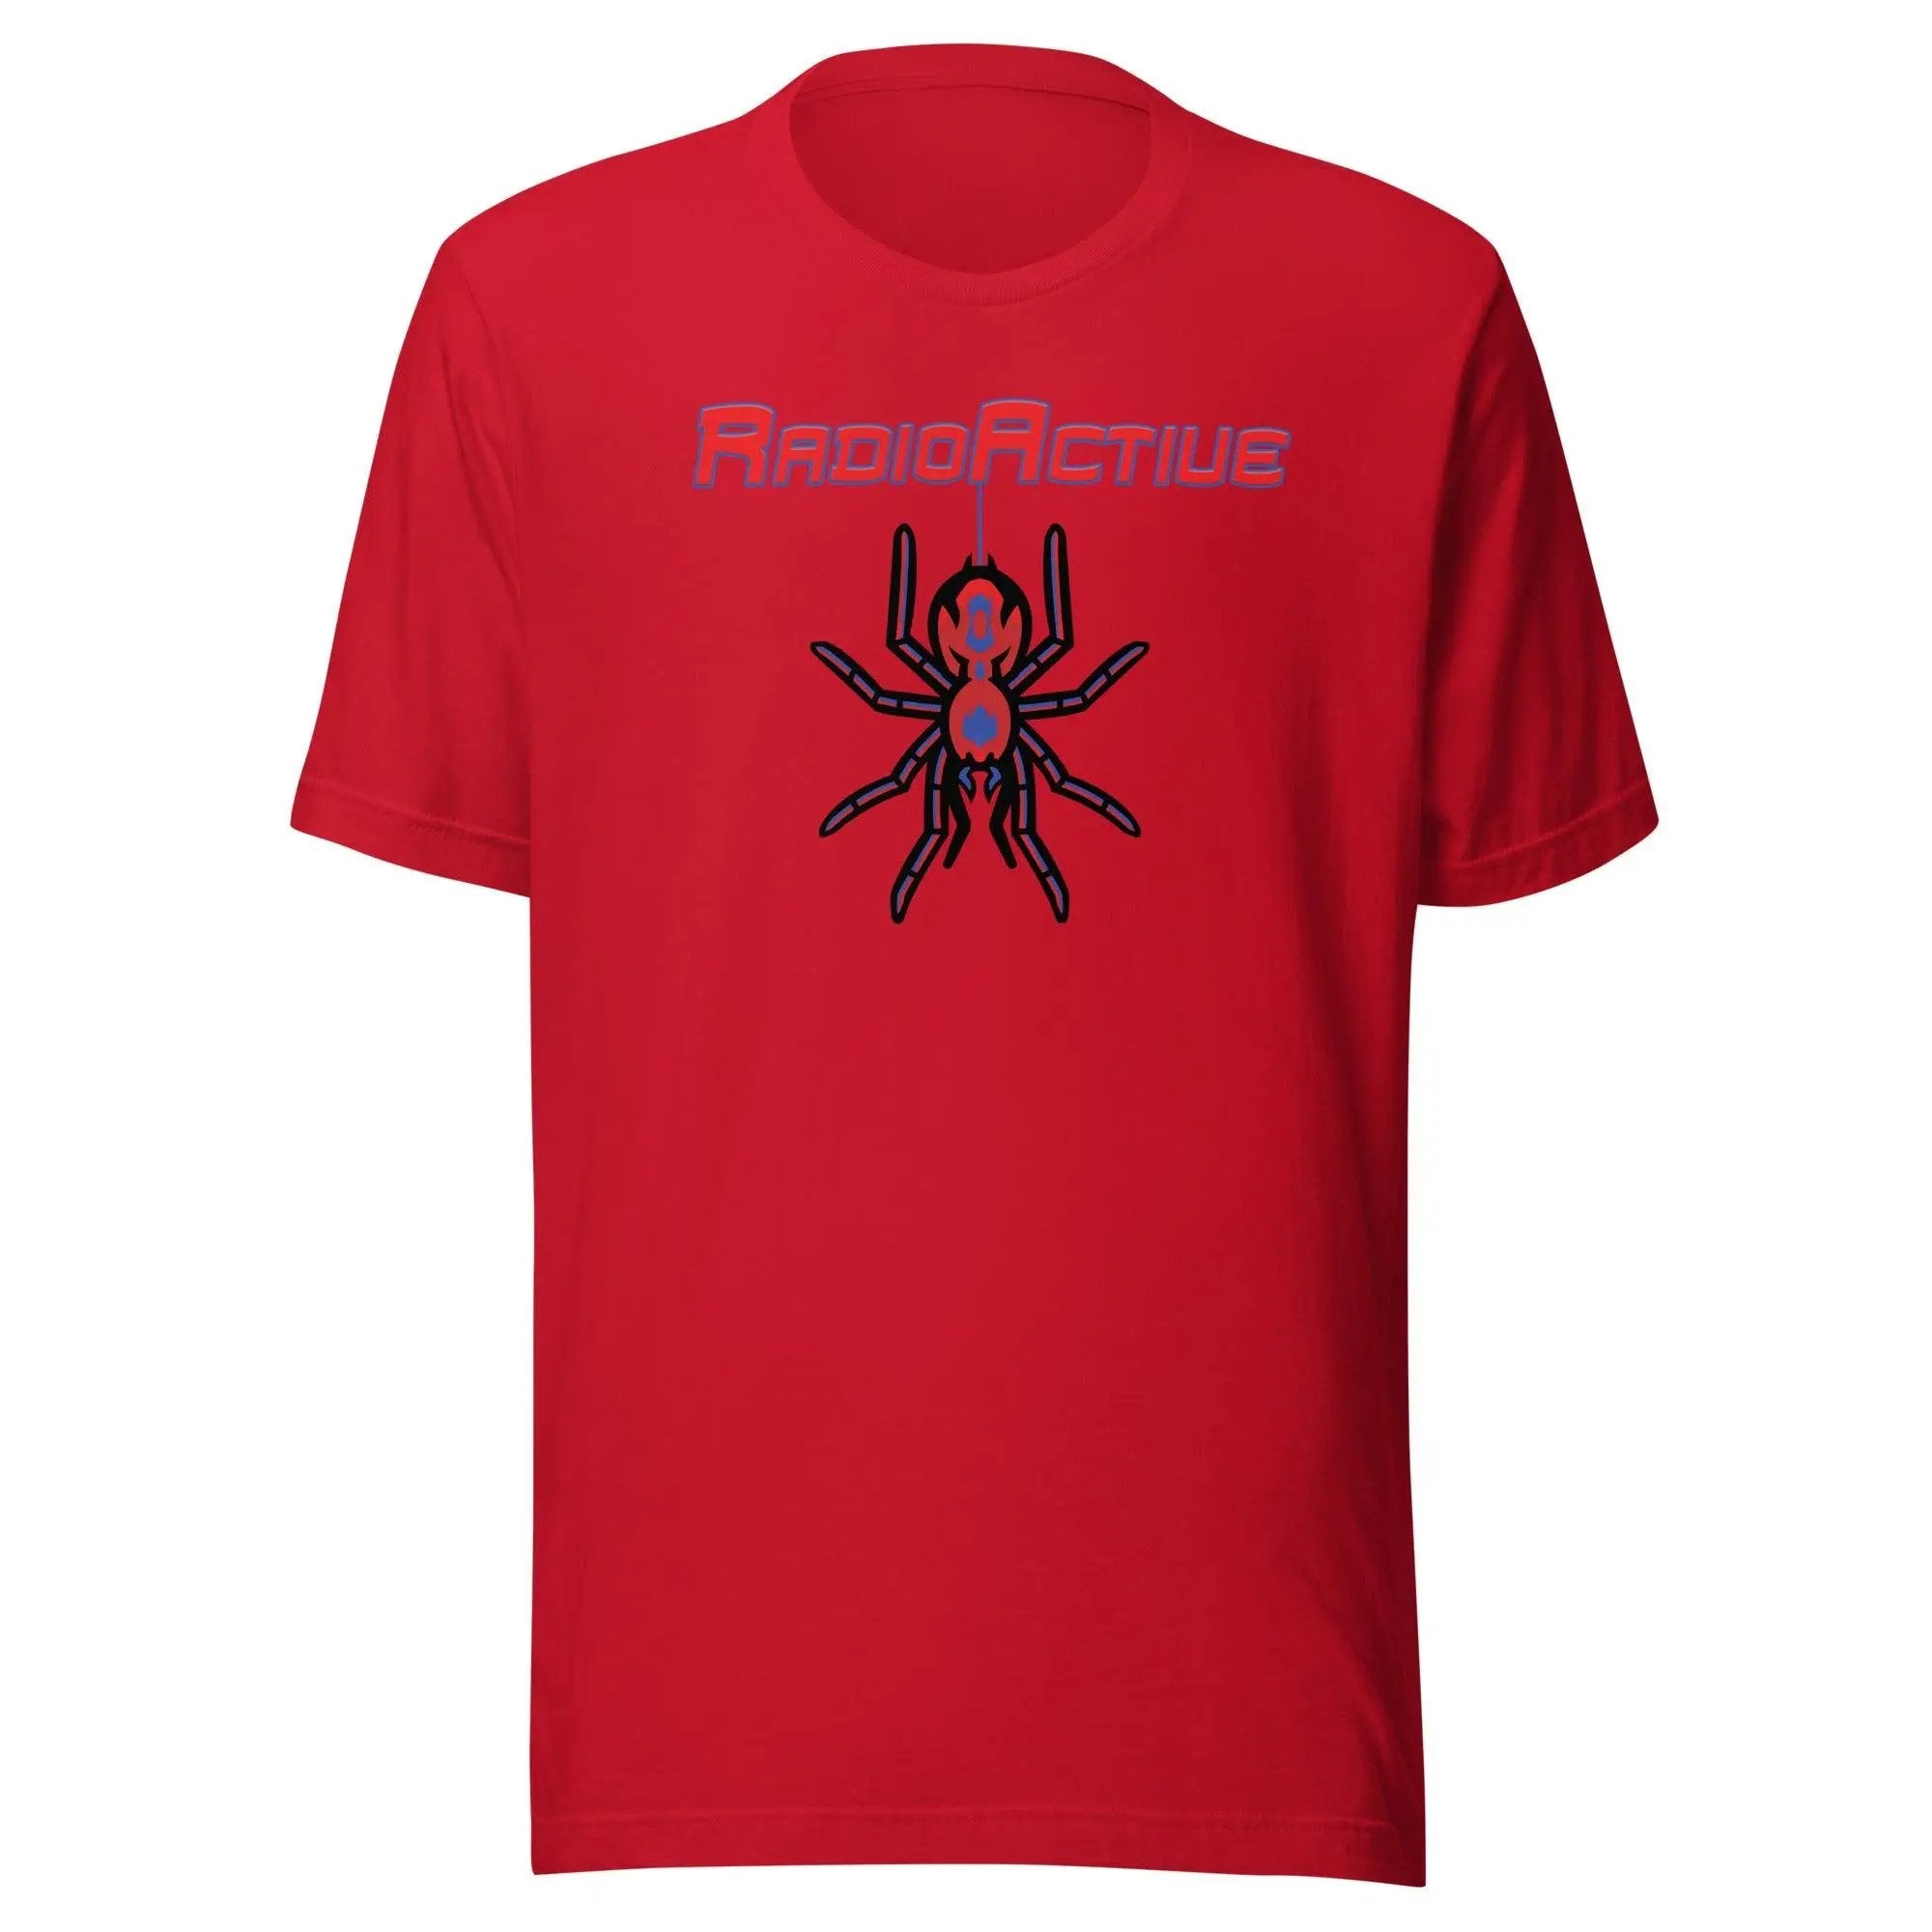 RadioActive! Unisex t-shirt